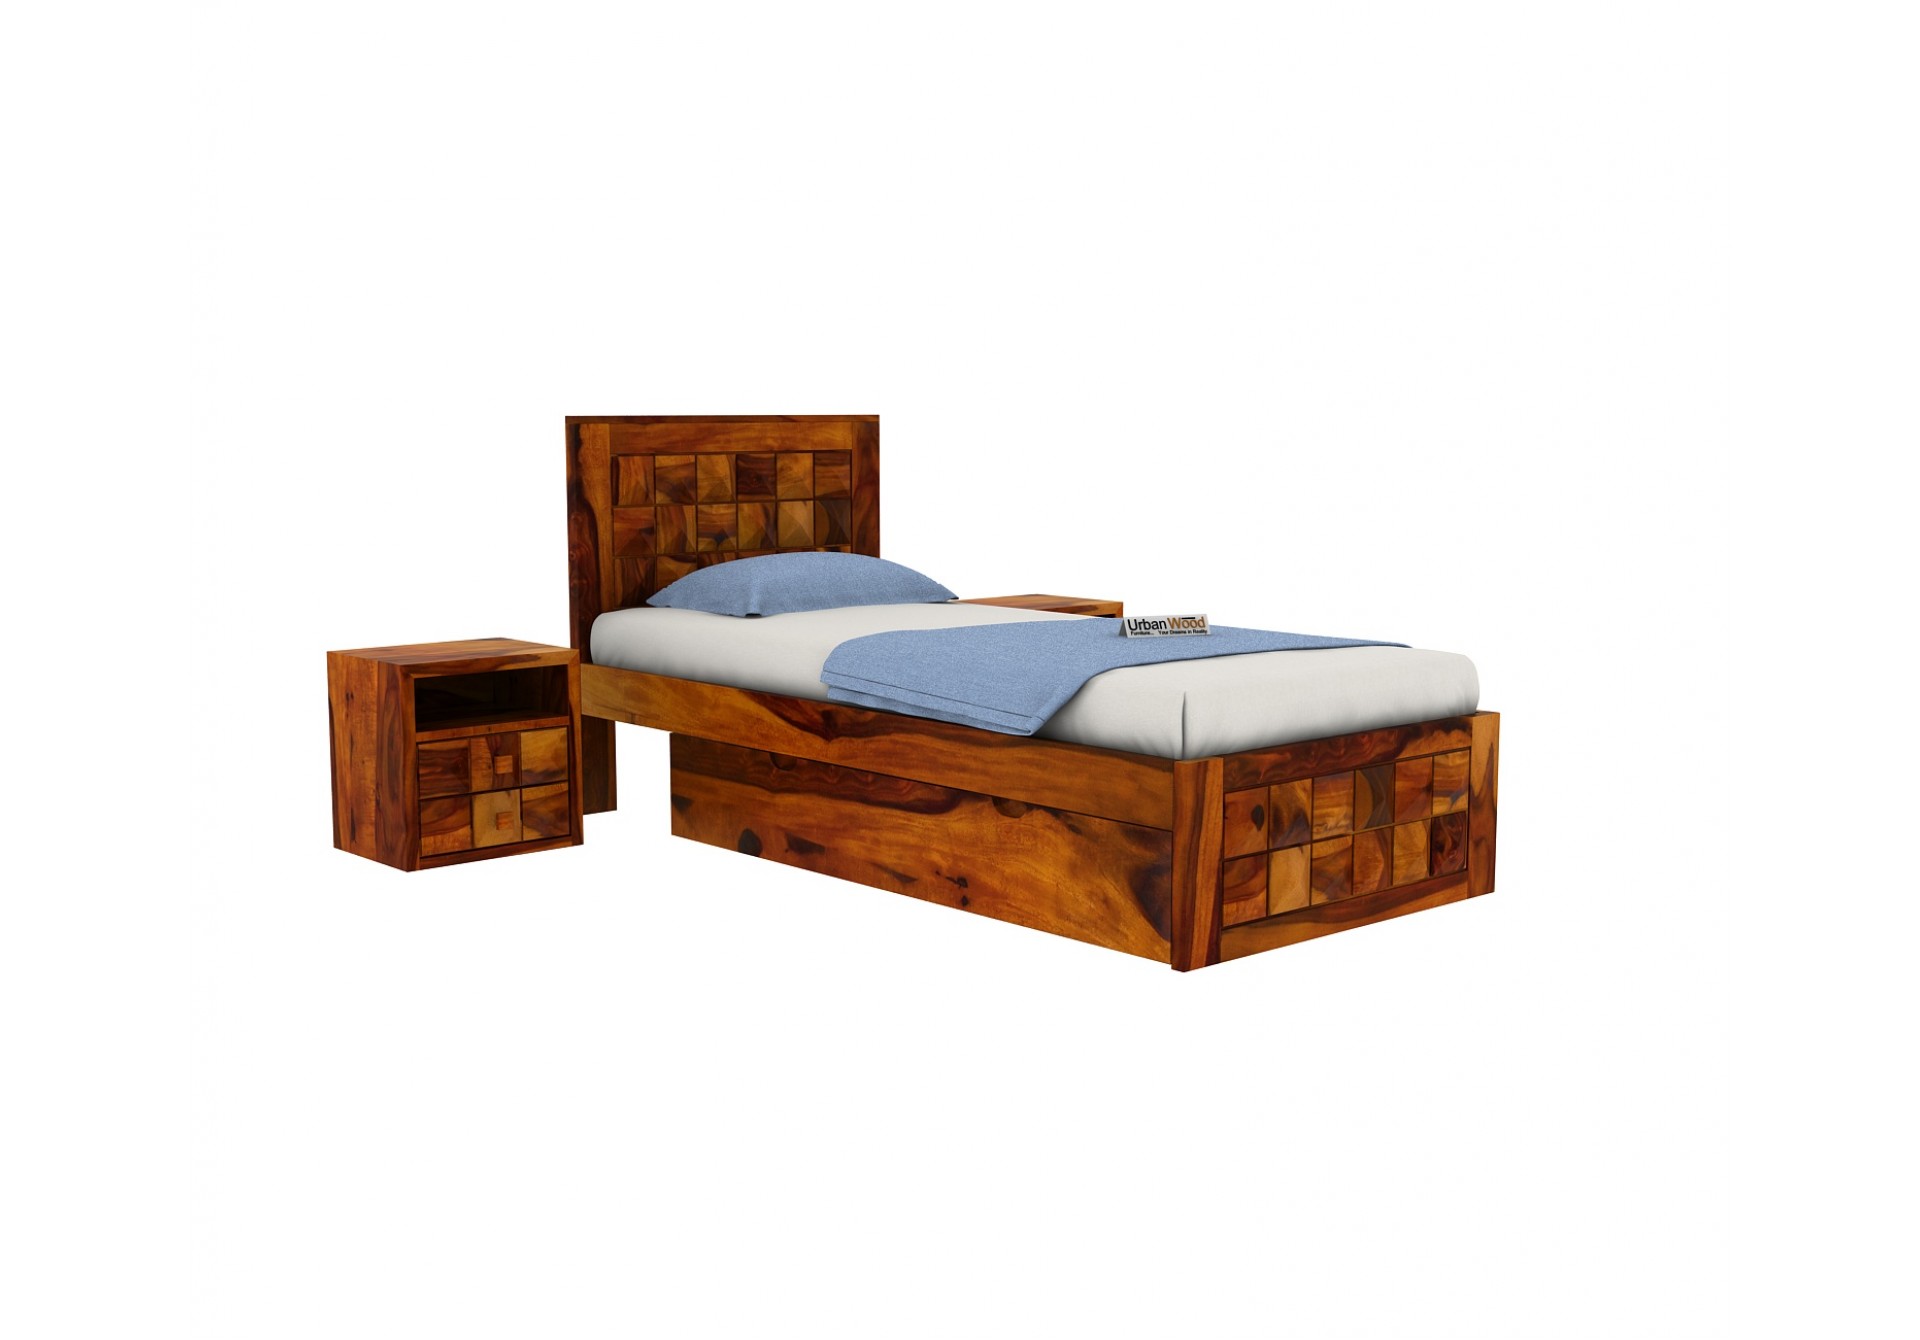 Morgana Single Bed With Drawer Storage ( Honey Finish )